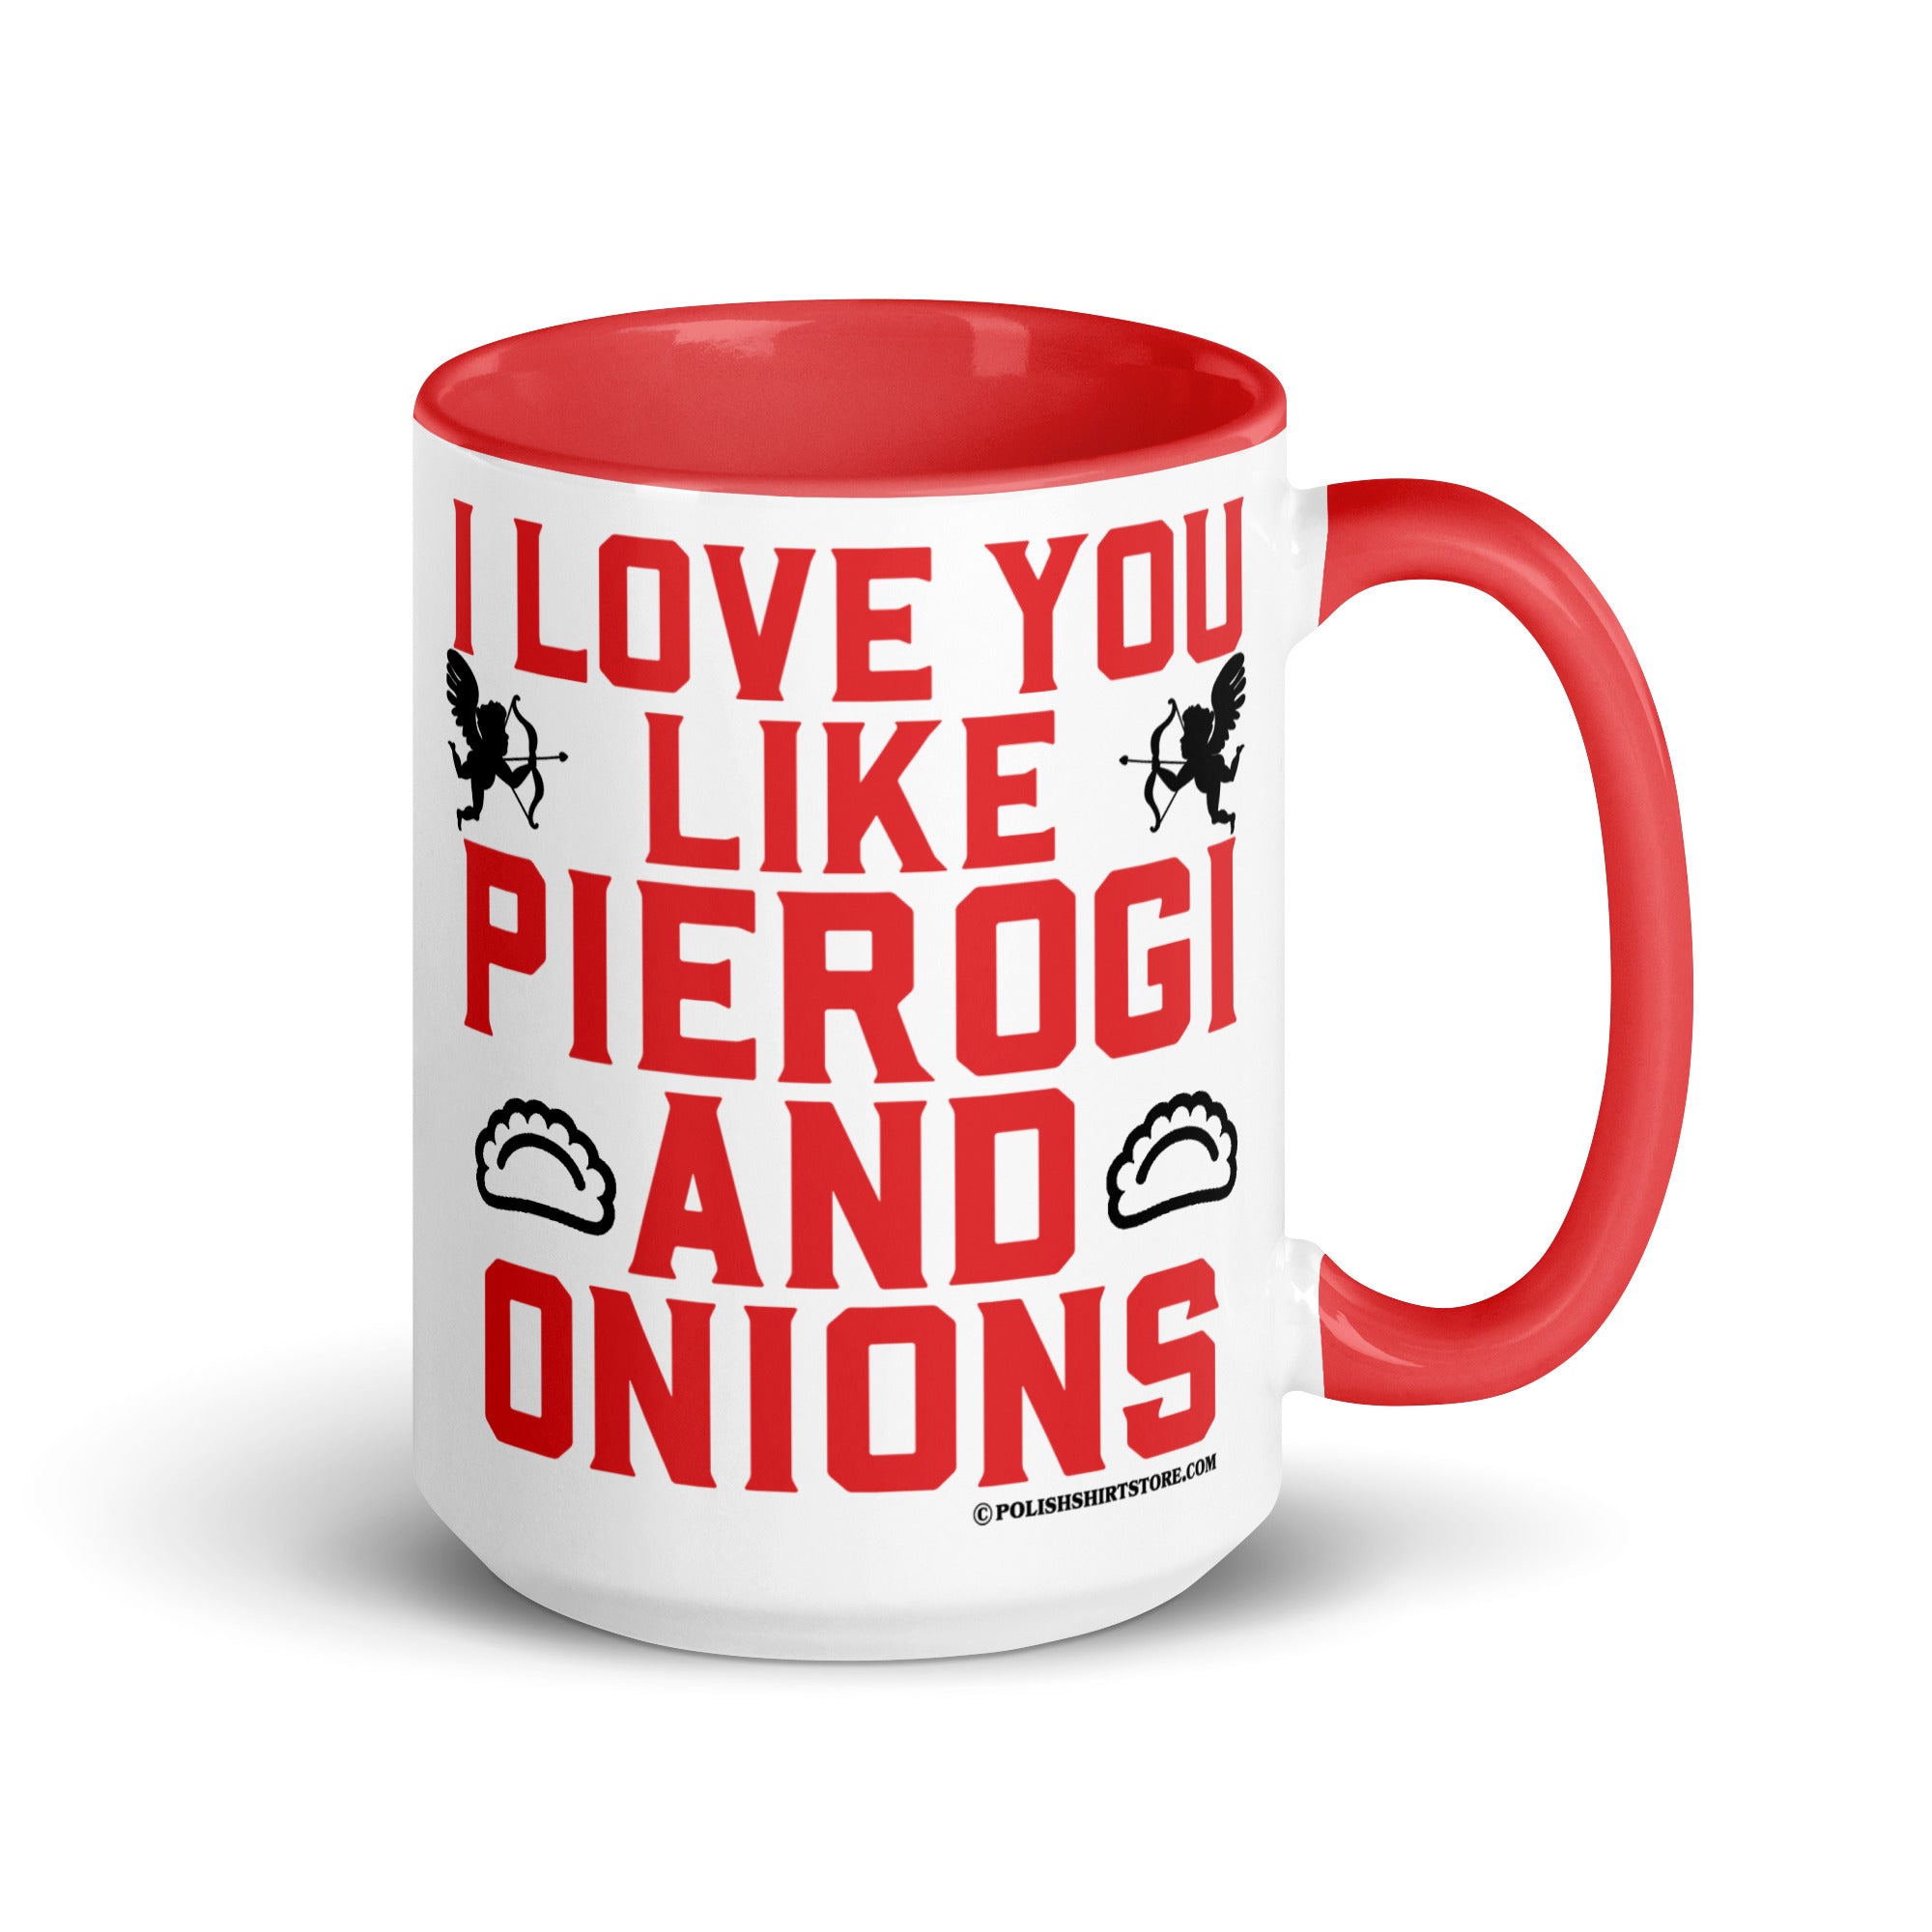 I Love You Like Pierogi And Onions Coffee Mug with Color Inside  Polish Shirt Store Red 15 oz 